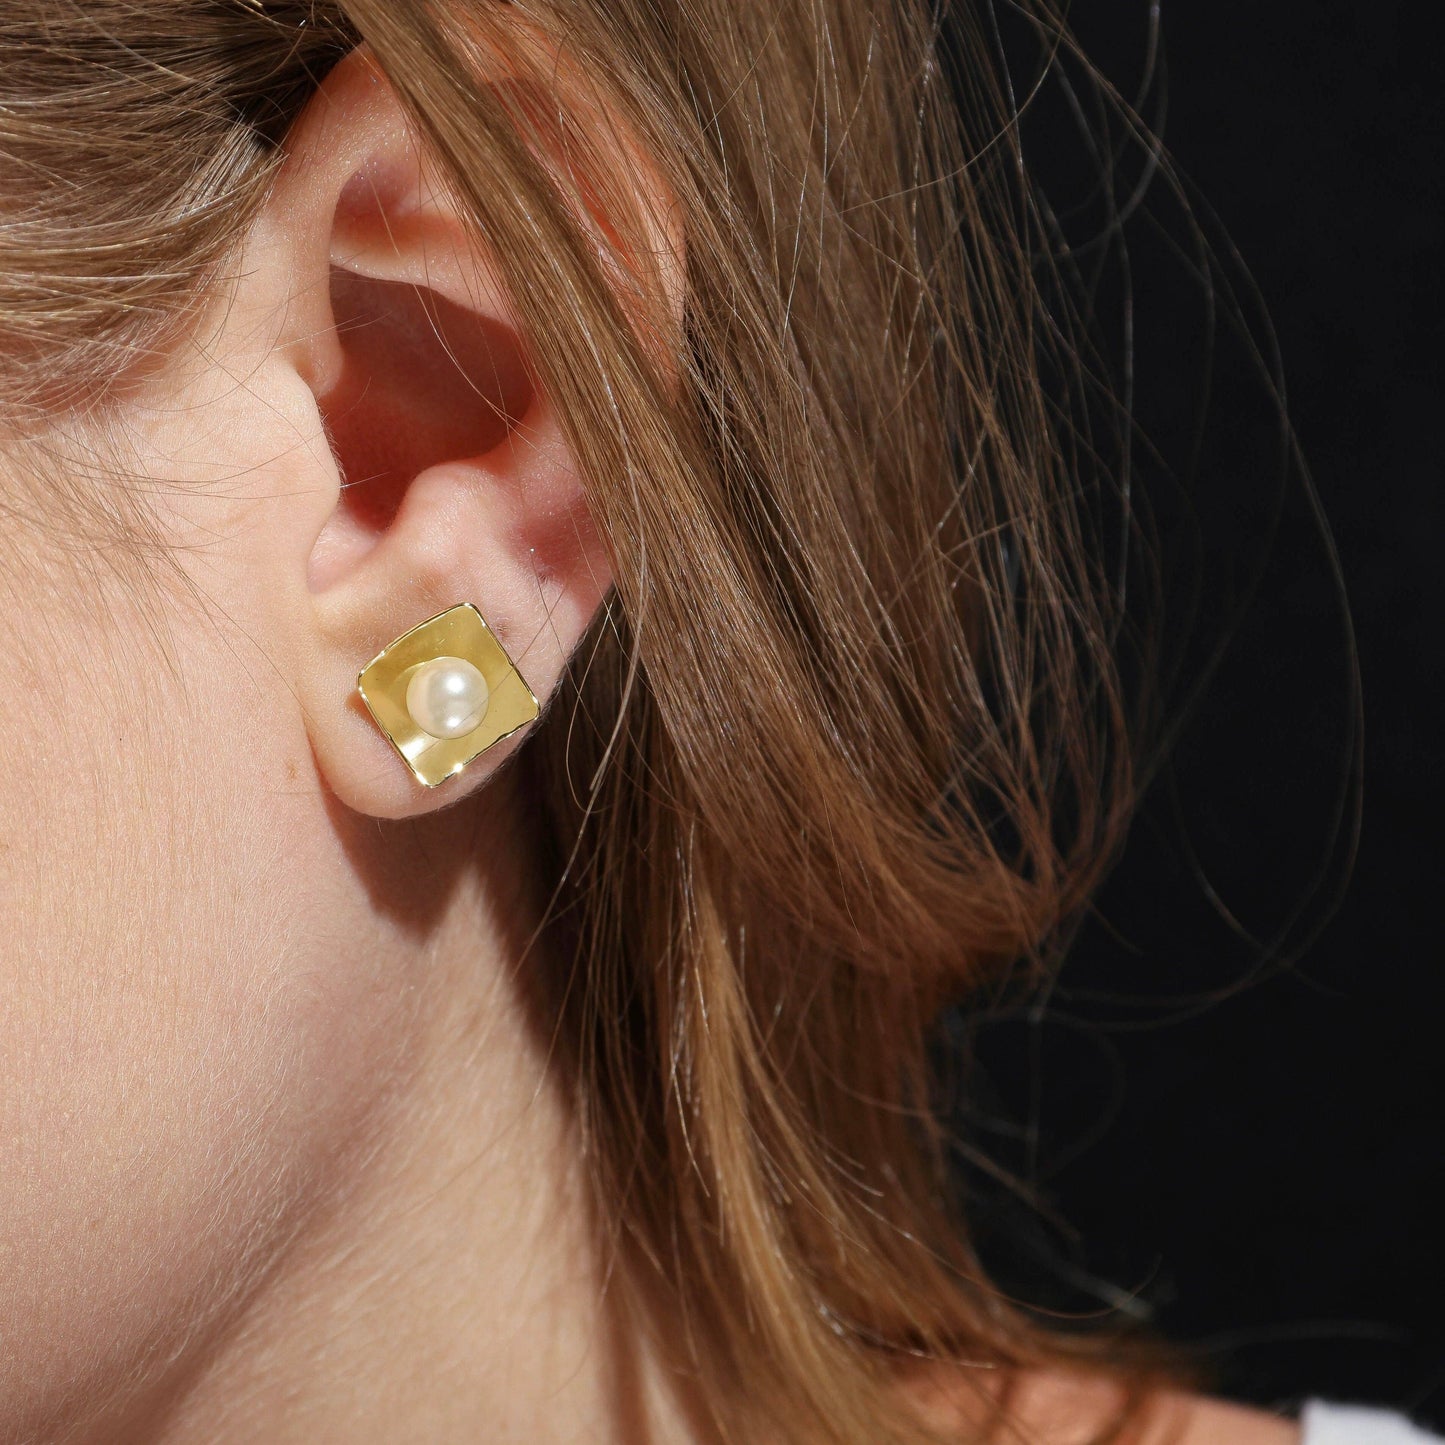 18 karat gold filled pearl stud earring set in gold plate anti-tarnish hypoallergenic 